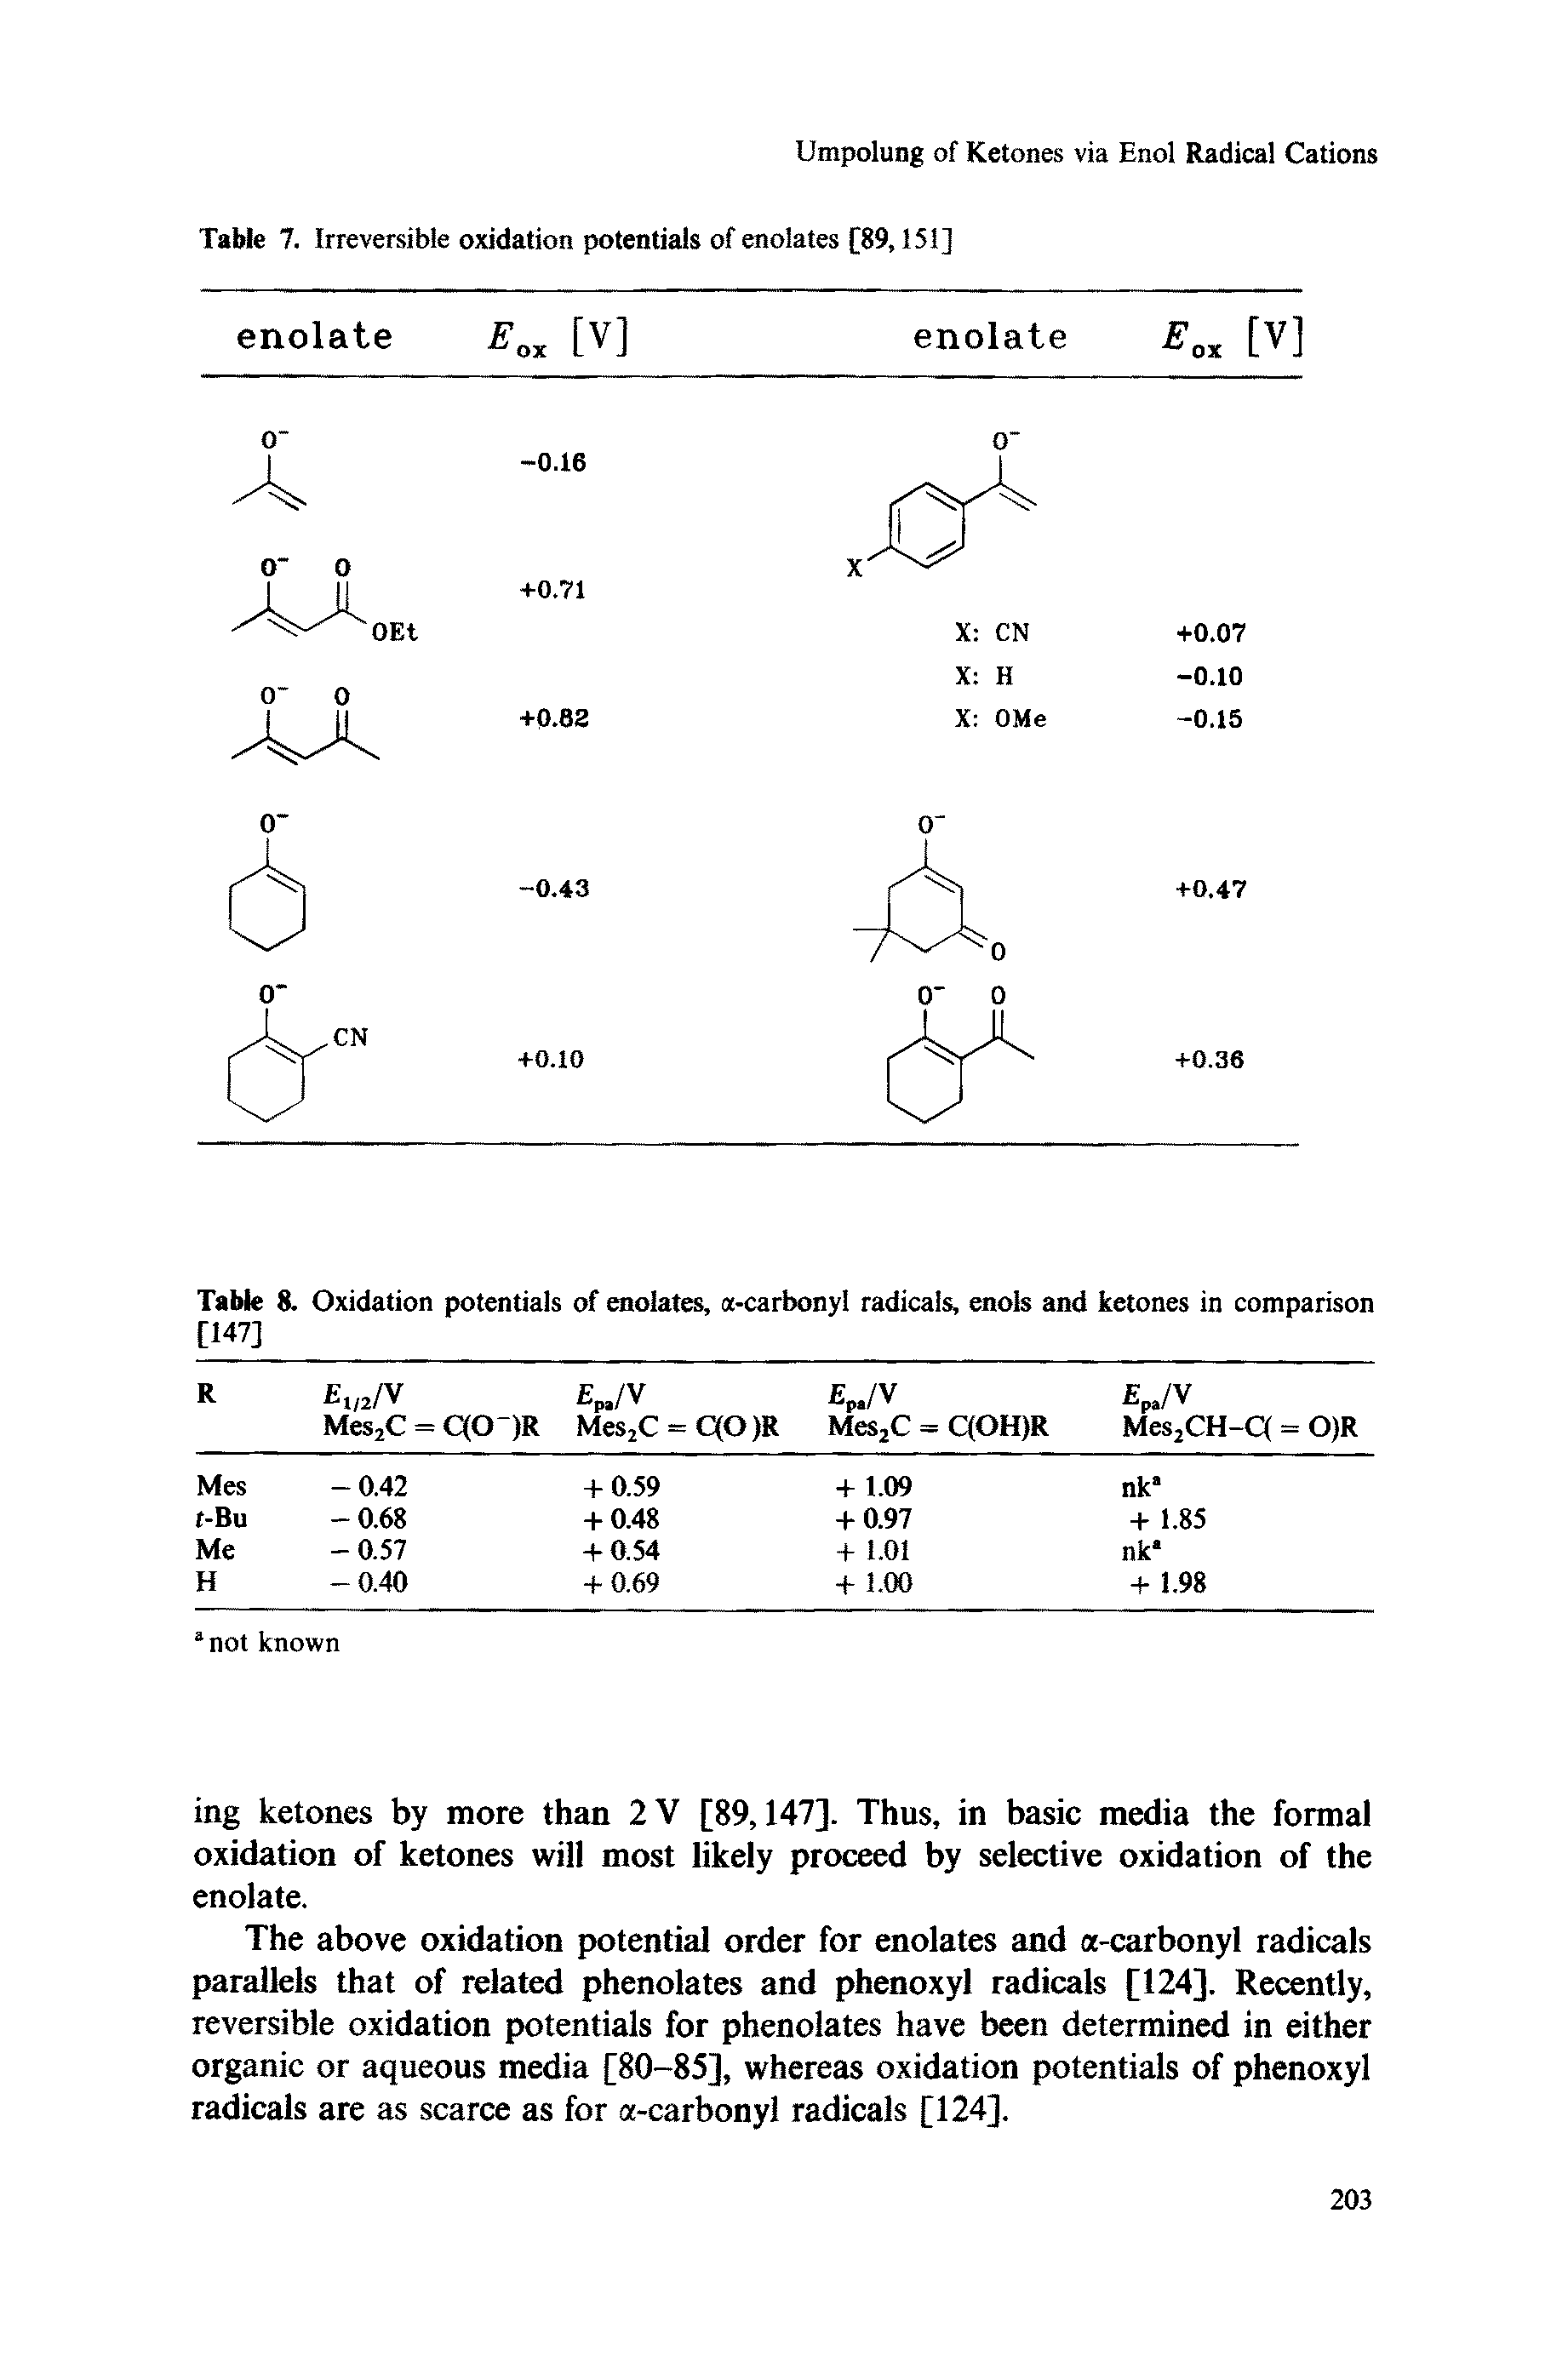 Table 8. Oxidation potentials of enolates, a-carbonyl radicals, enols and ketones in comparison [147]...